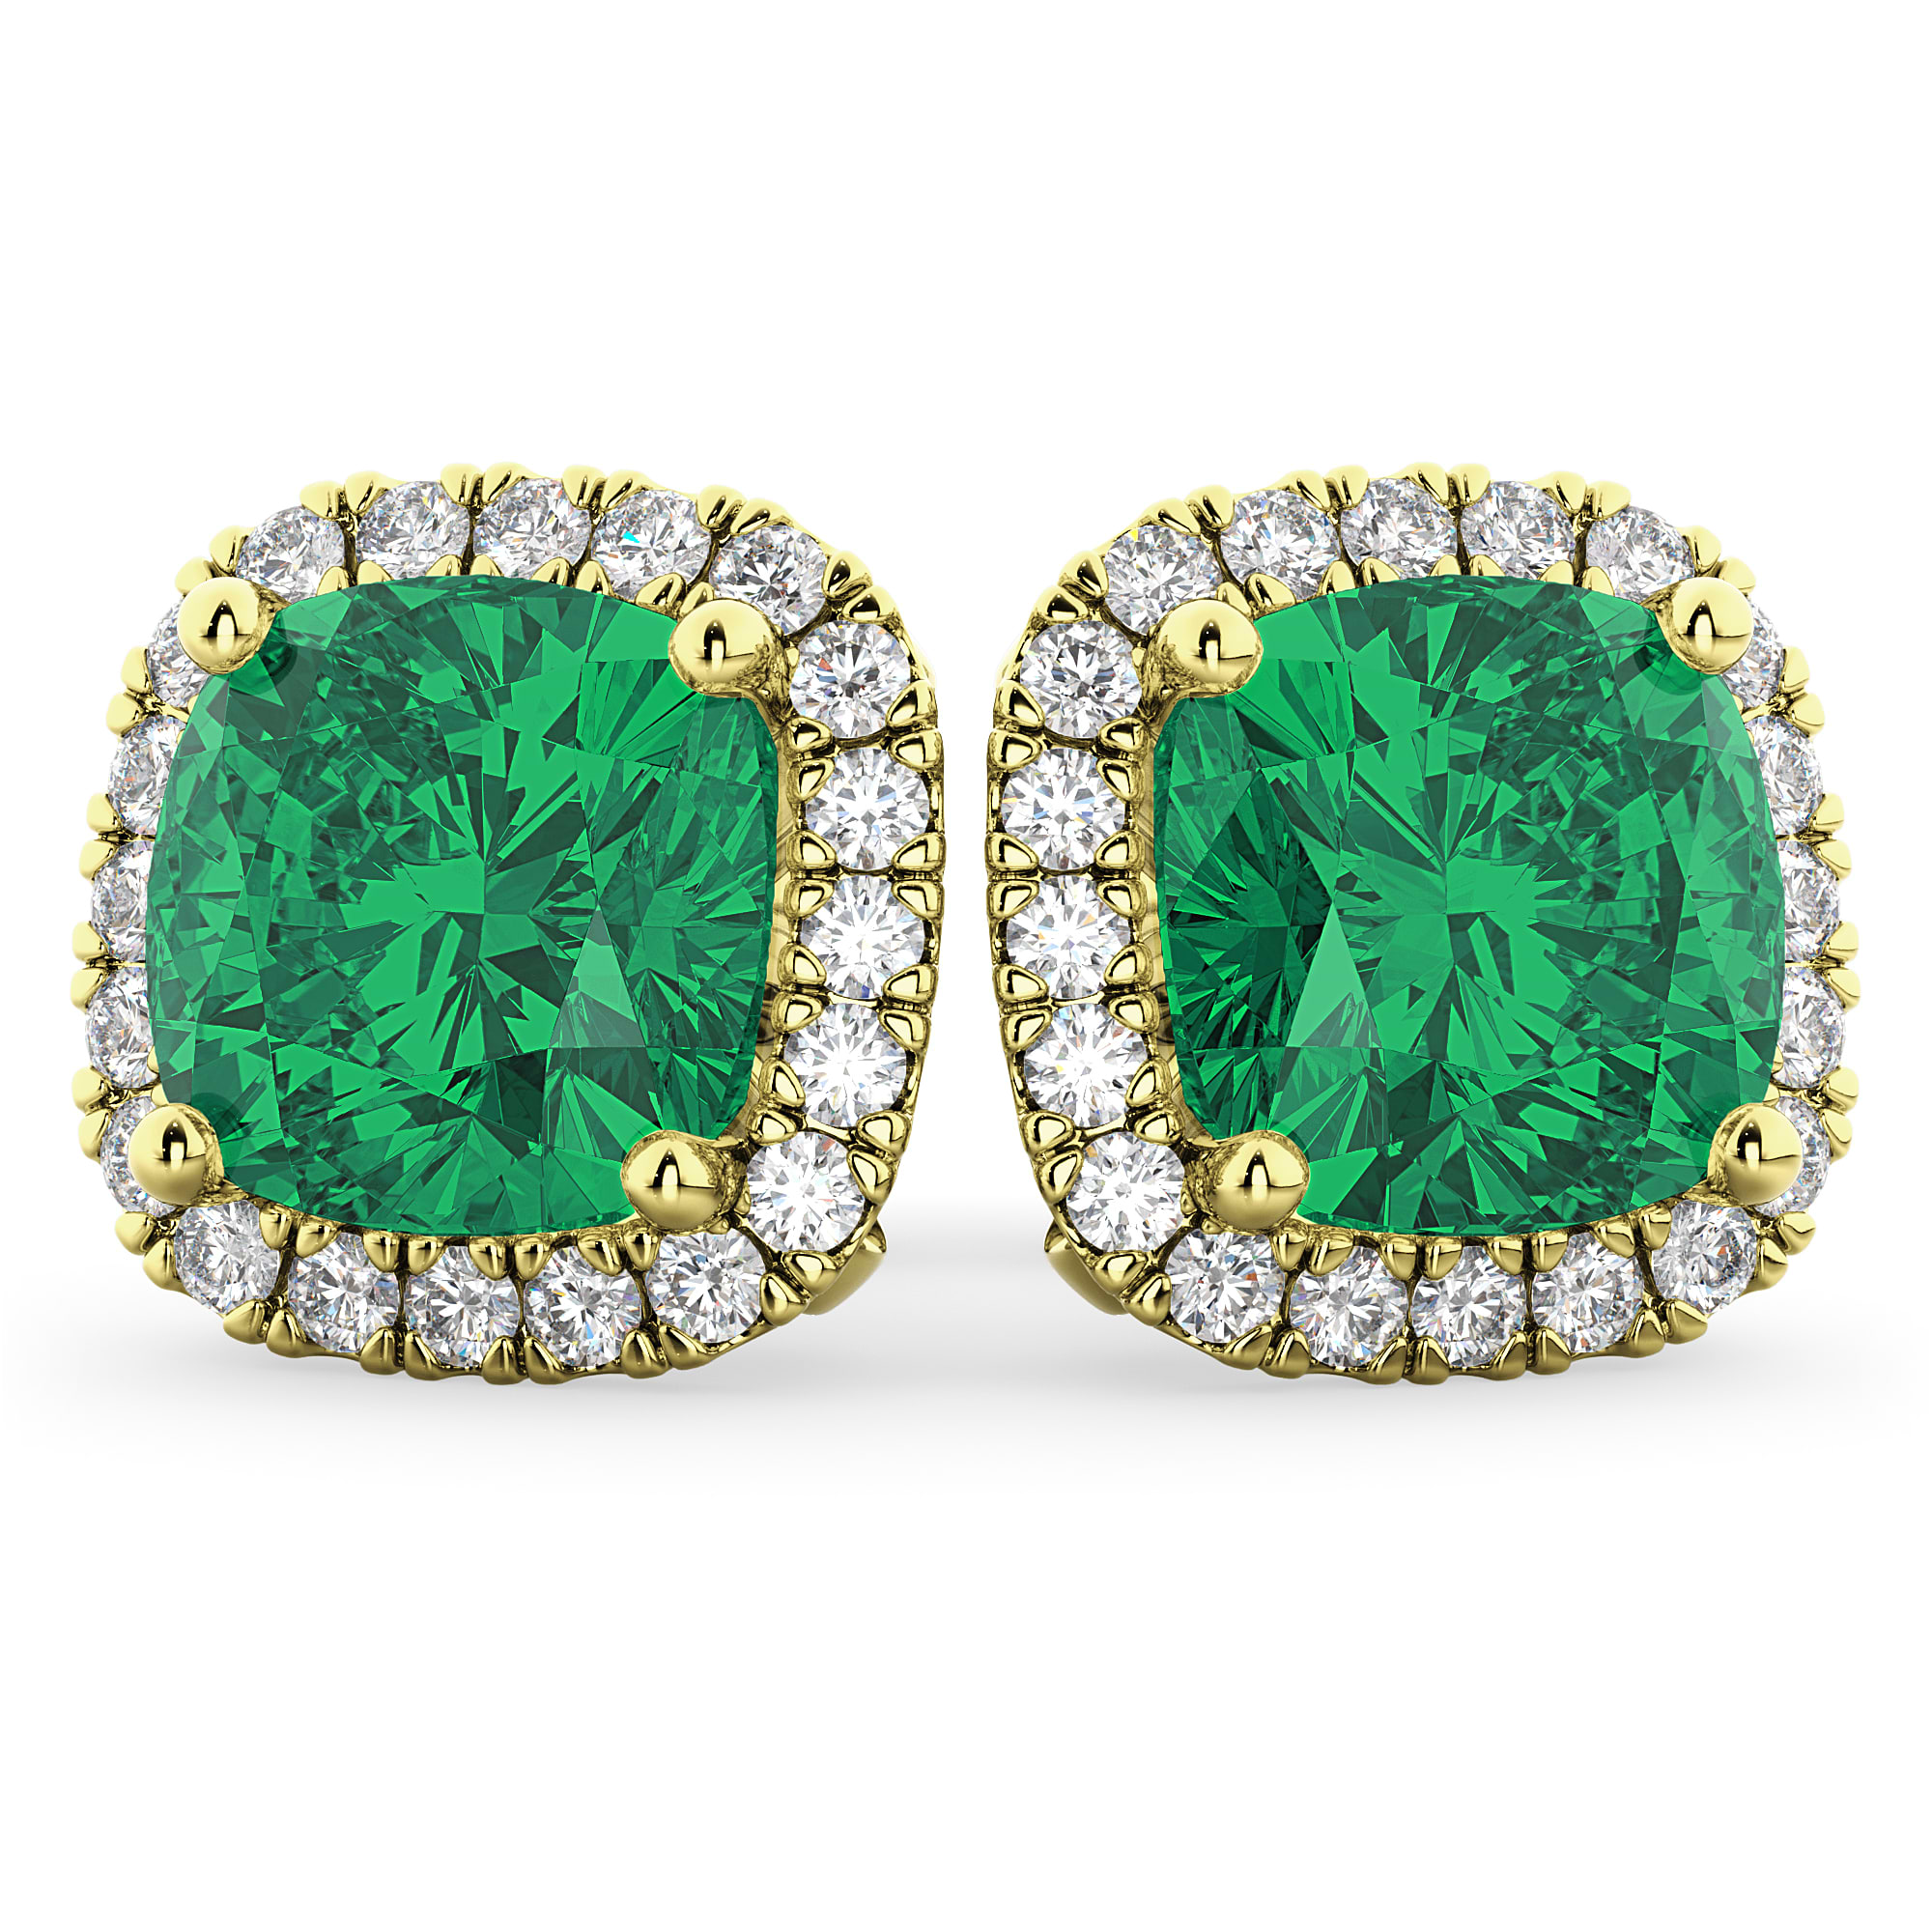 Halo Cushion Emerald & Diamond Earrings 14k Yellow Gold (4.04ct)